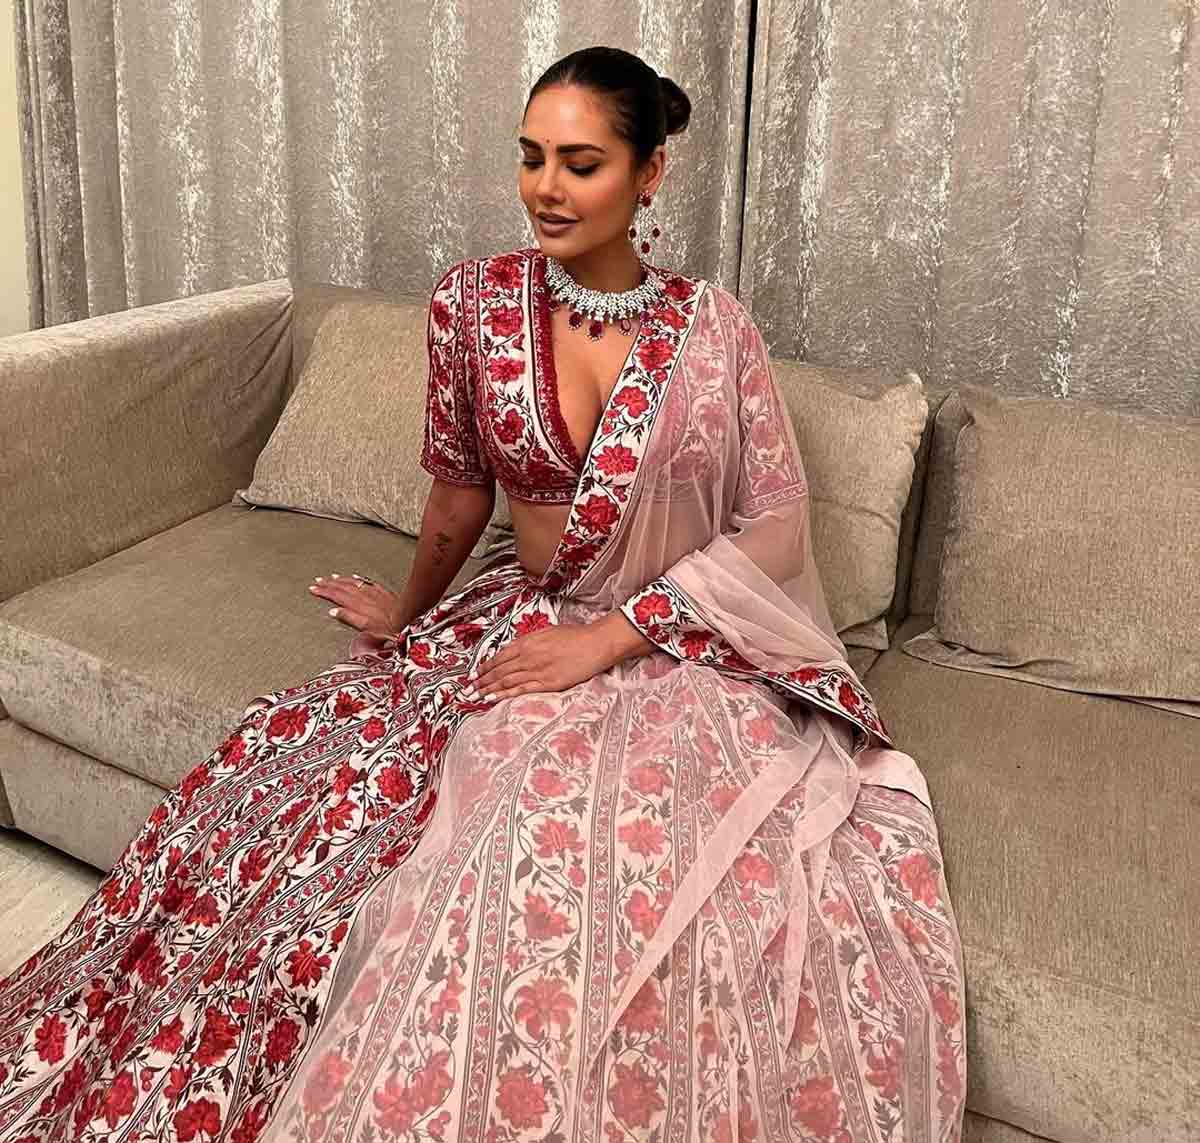 Esha Gupta looks scintillating in Rohit Bal's floral saree and